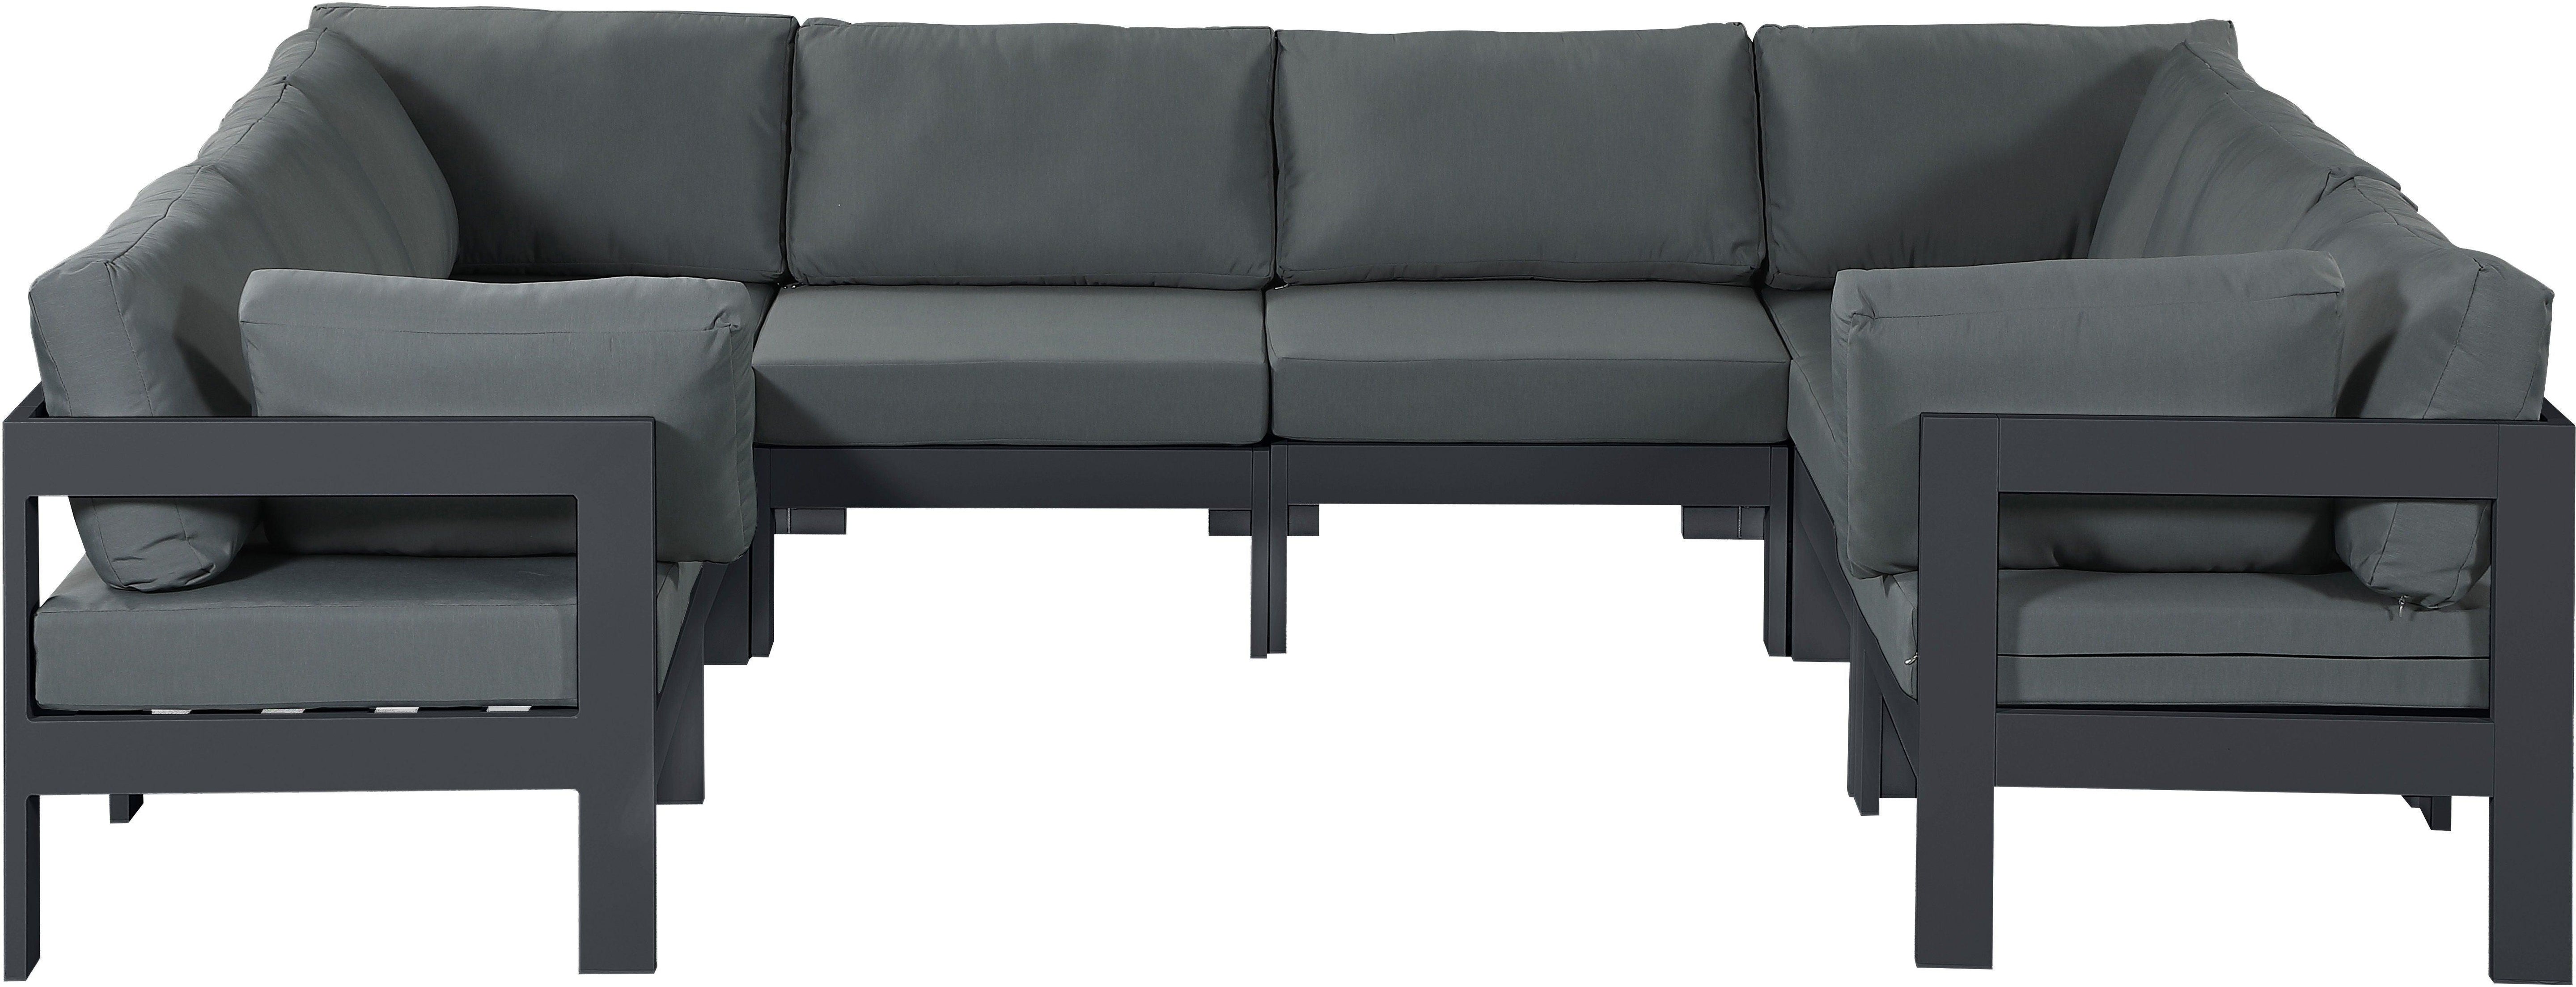 Meridian Furniture - Nizuc - Outdoor Patio Modular Sectional 8 Piece - Grey - 5th Avenue Furniture